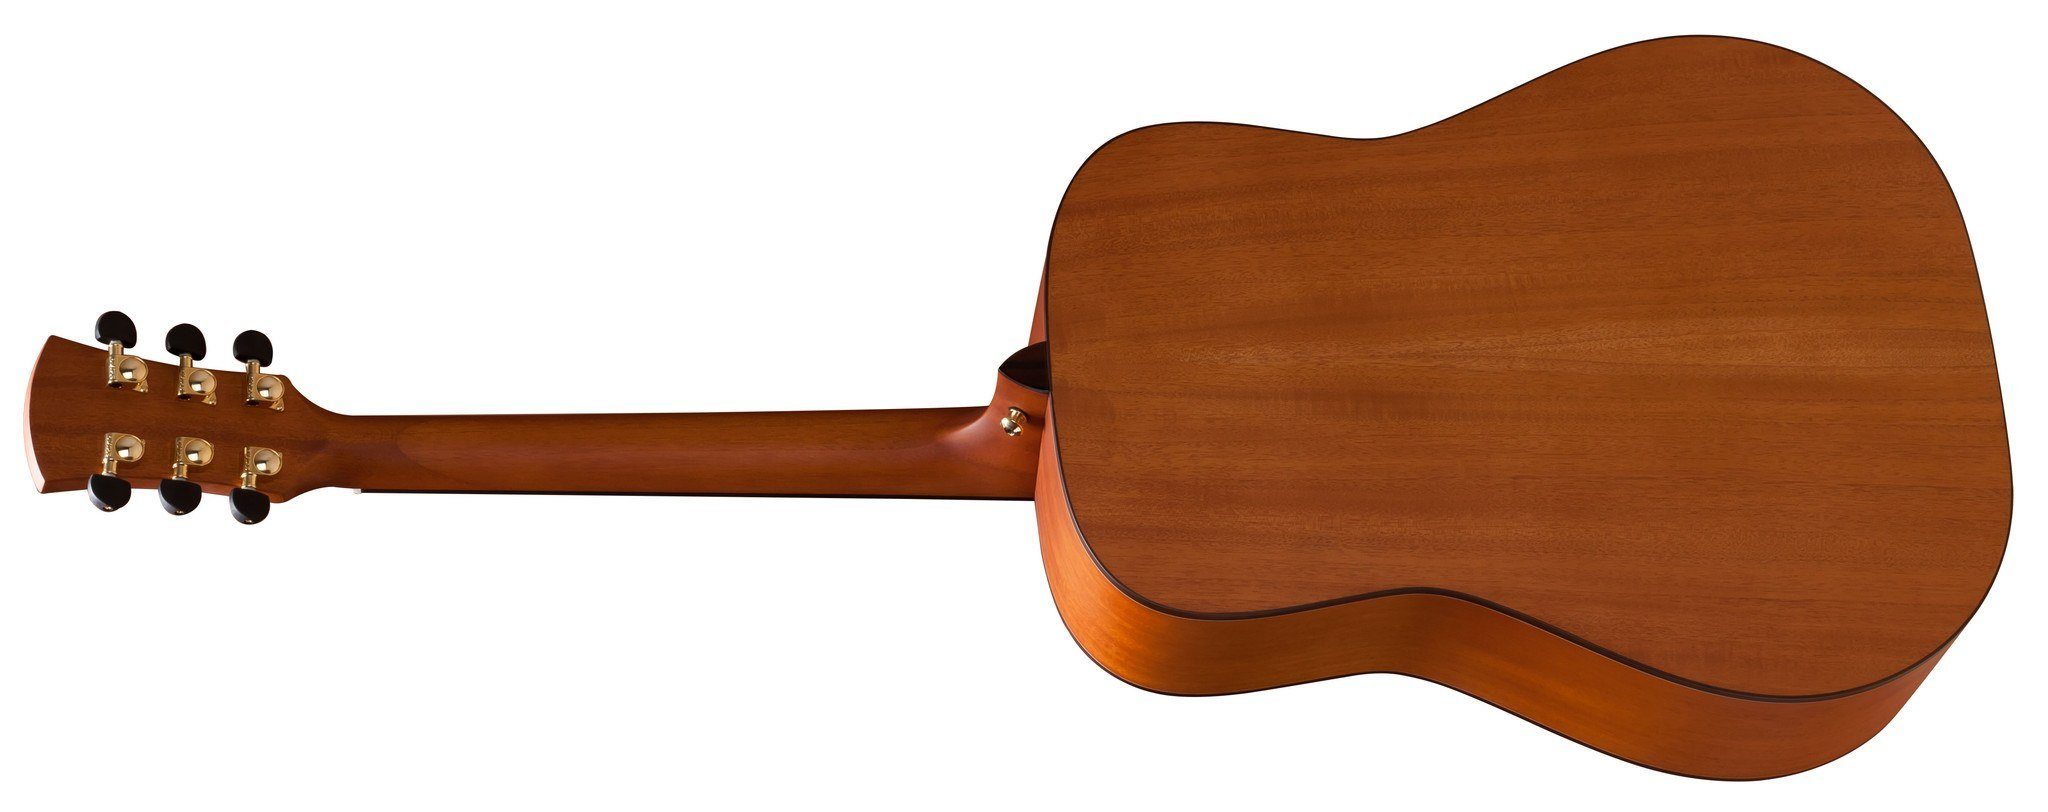 Faith FS Acoustic Guitar (Saturn Dreadnought Natural), Acoustic Guitar for sale at Richards Guitars.